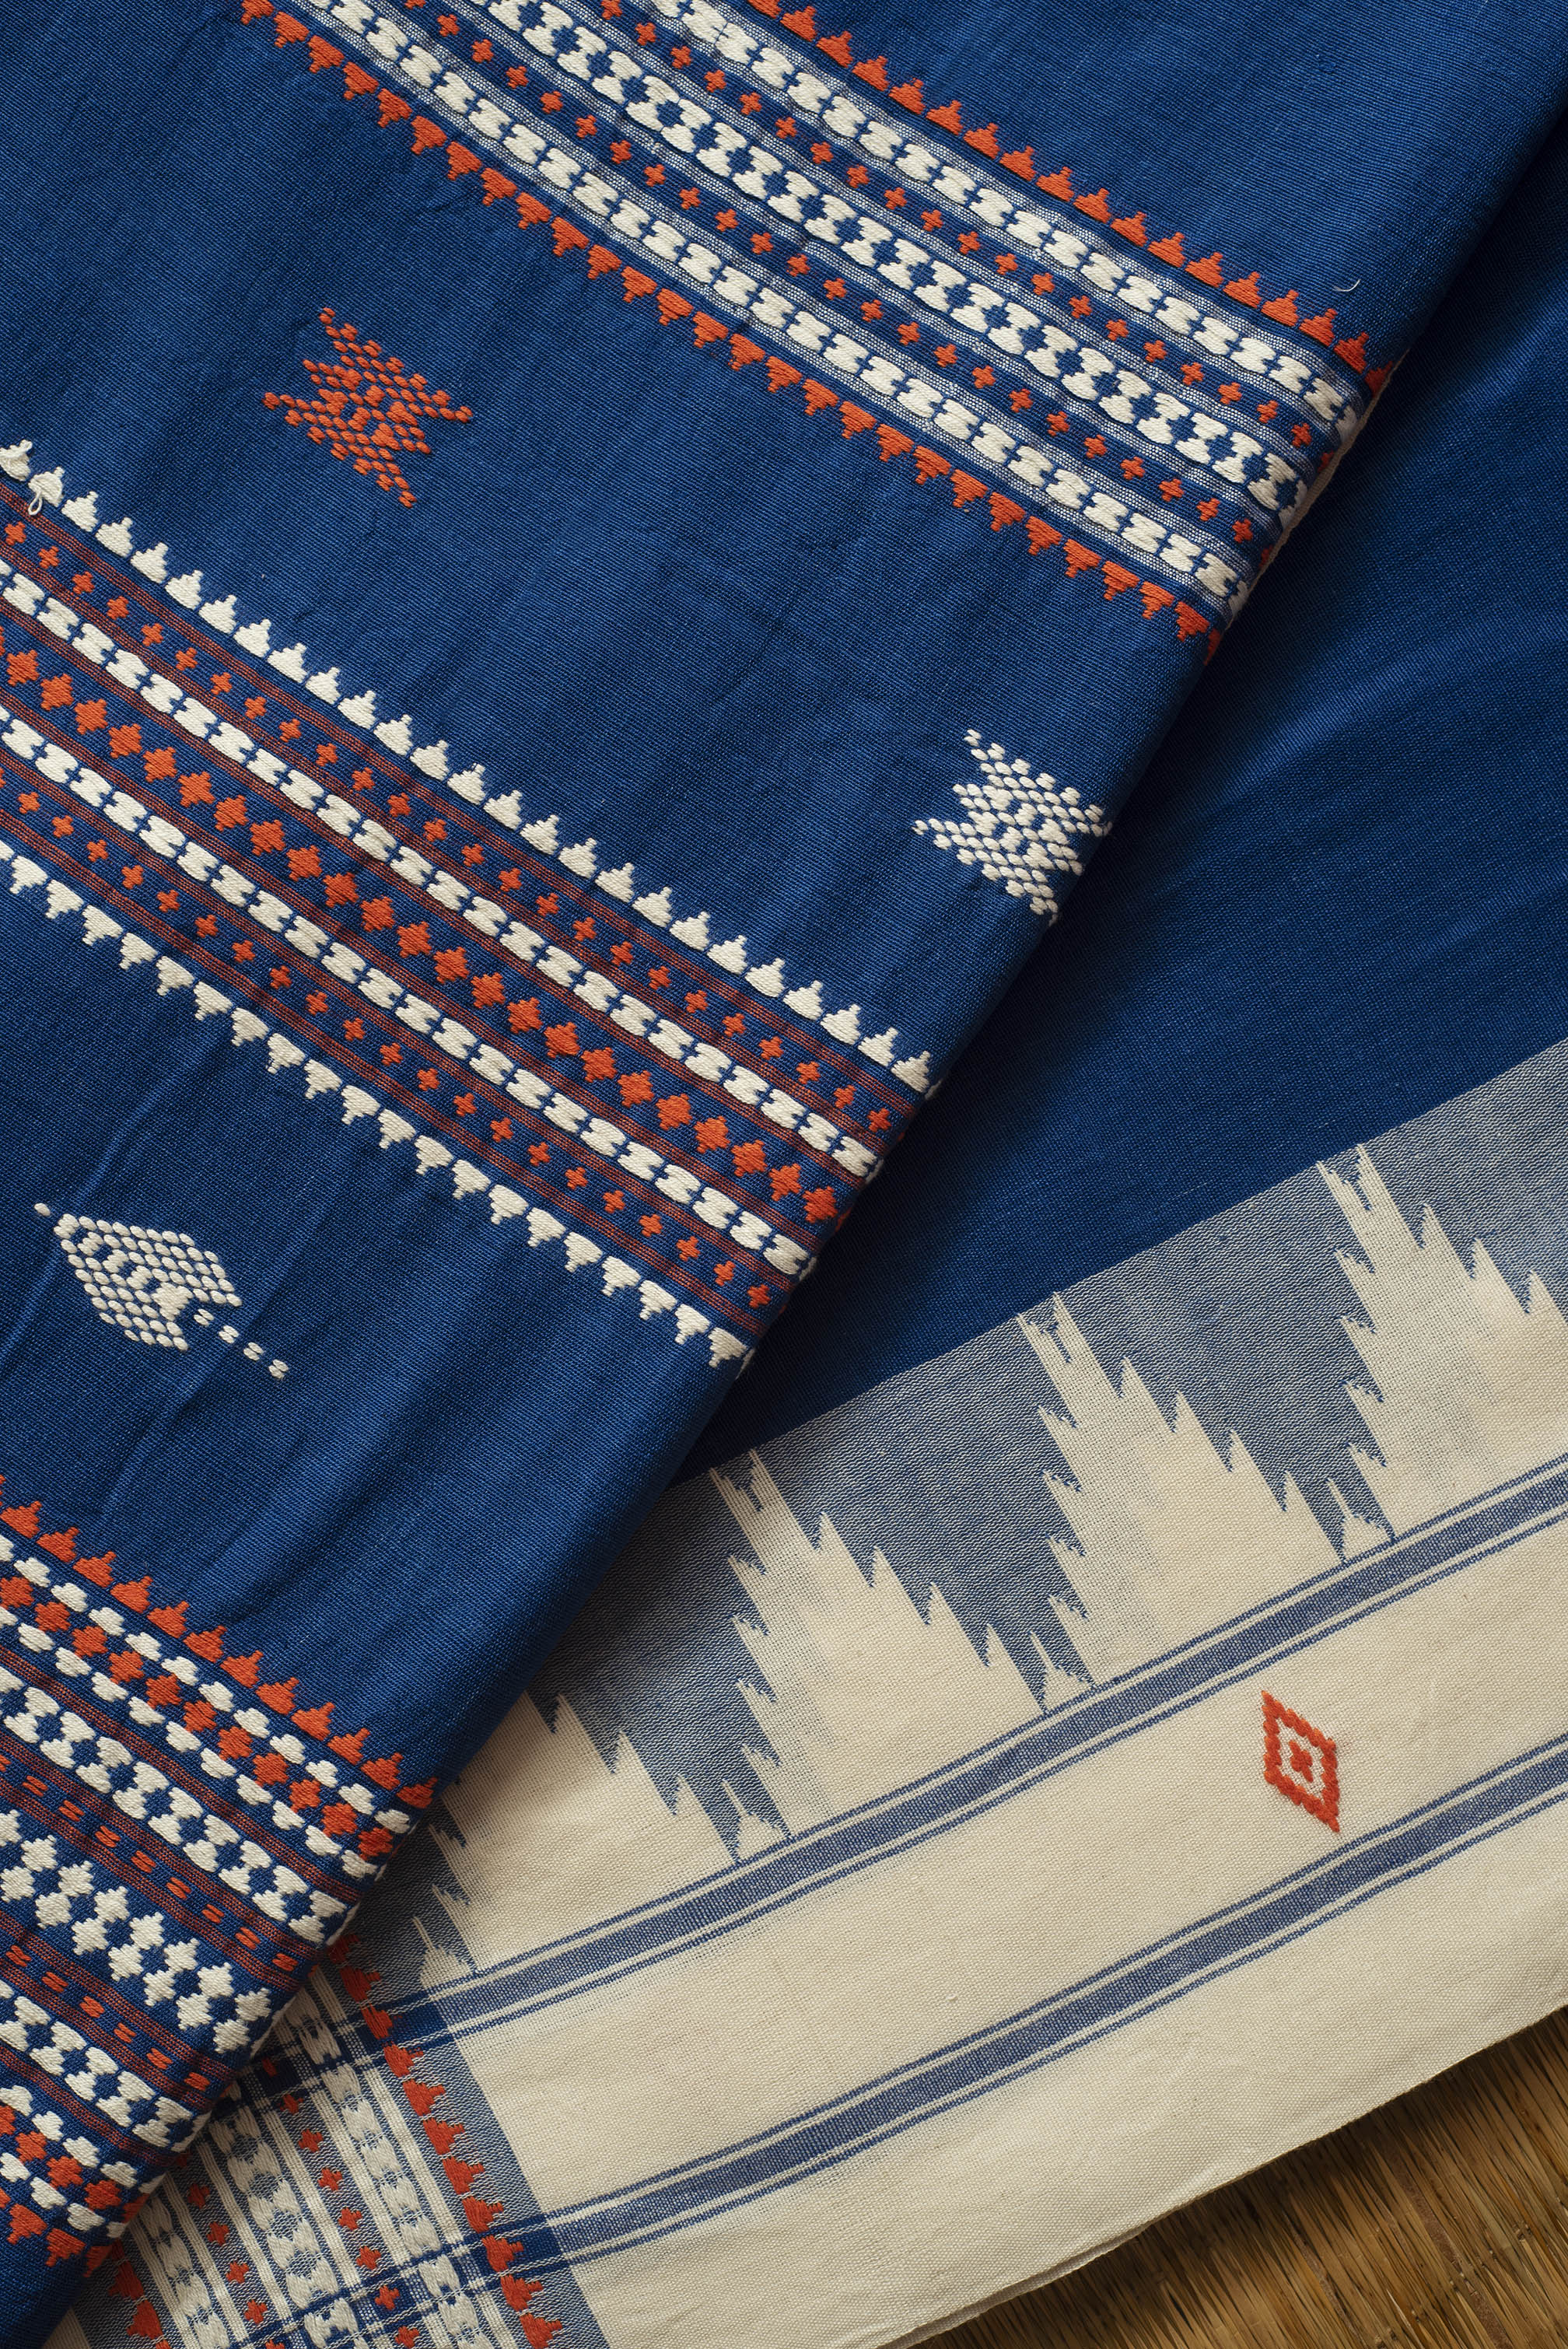 Kotpad handloom cotton saree | natural dyed | indigo